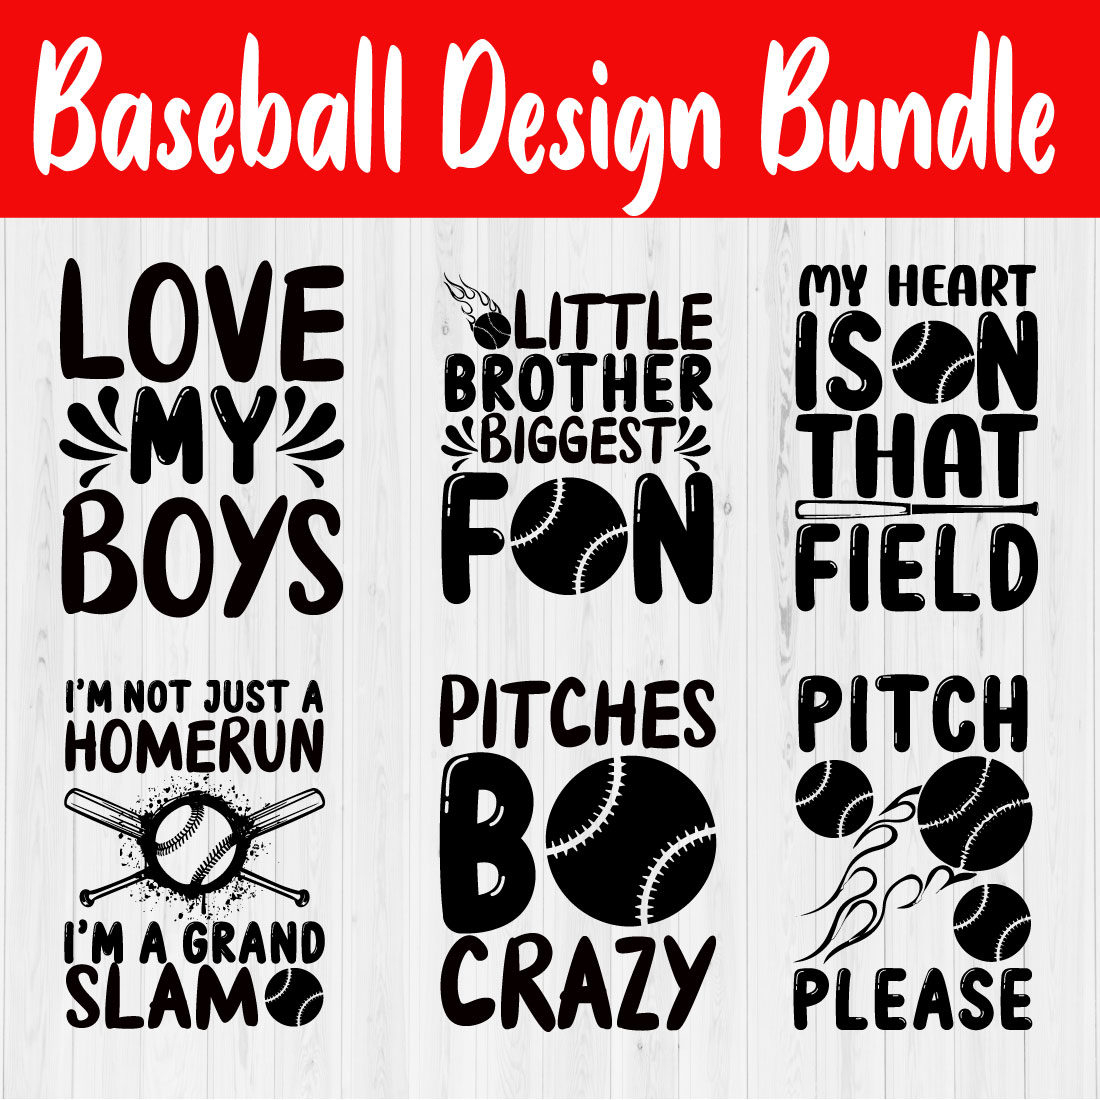 Baseball Design Bundle Vol2 cover image.